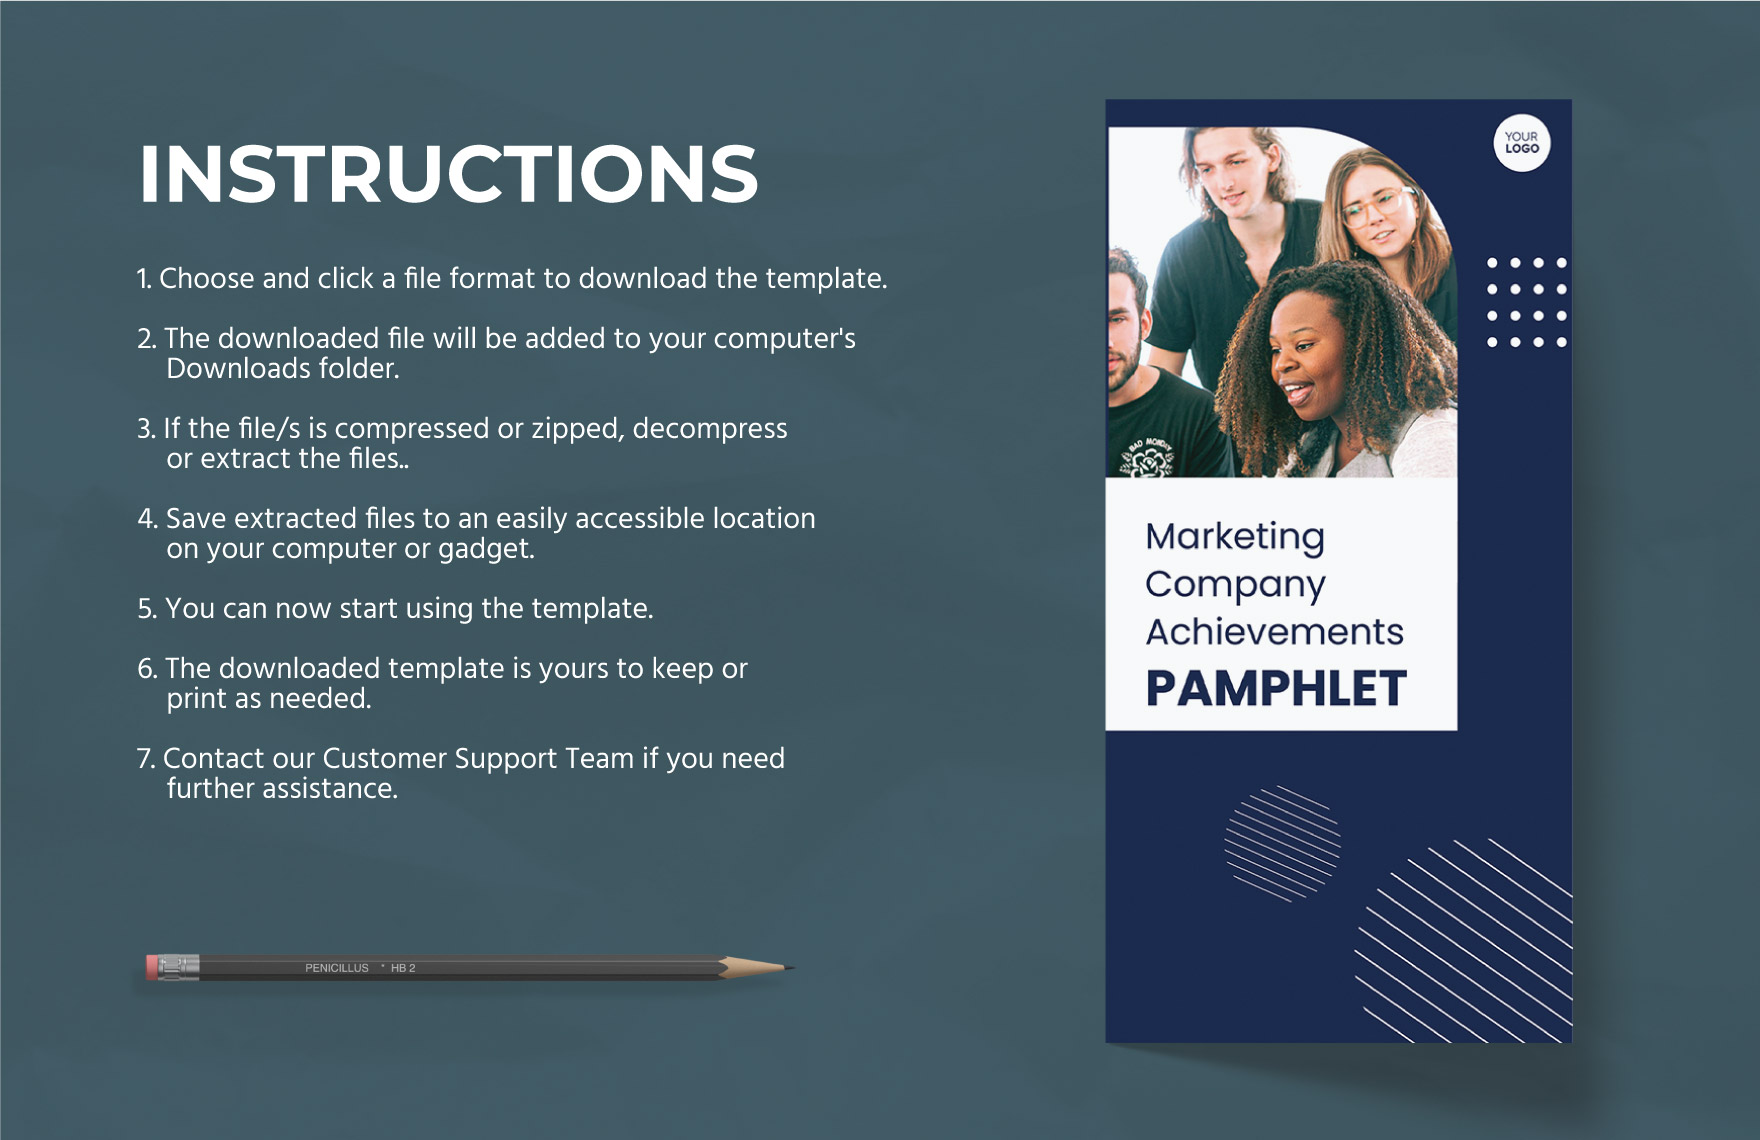 Marketing Company Achievements Pamphlet Template